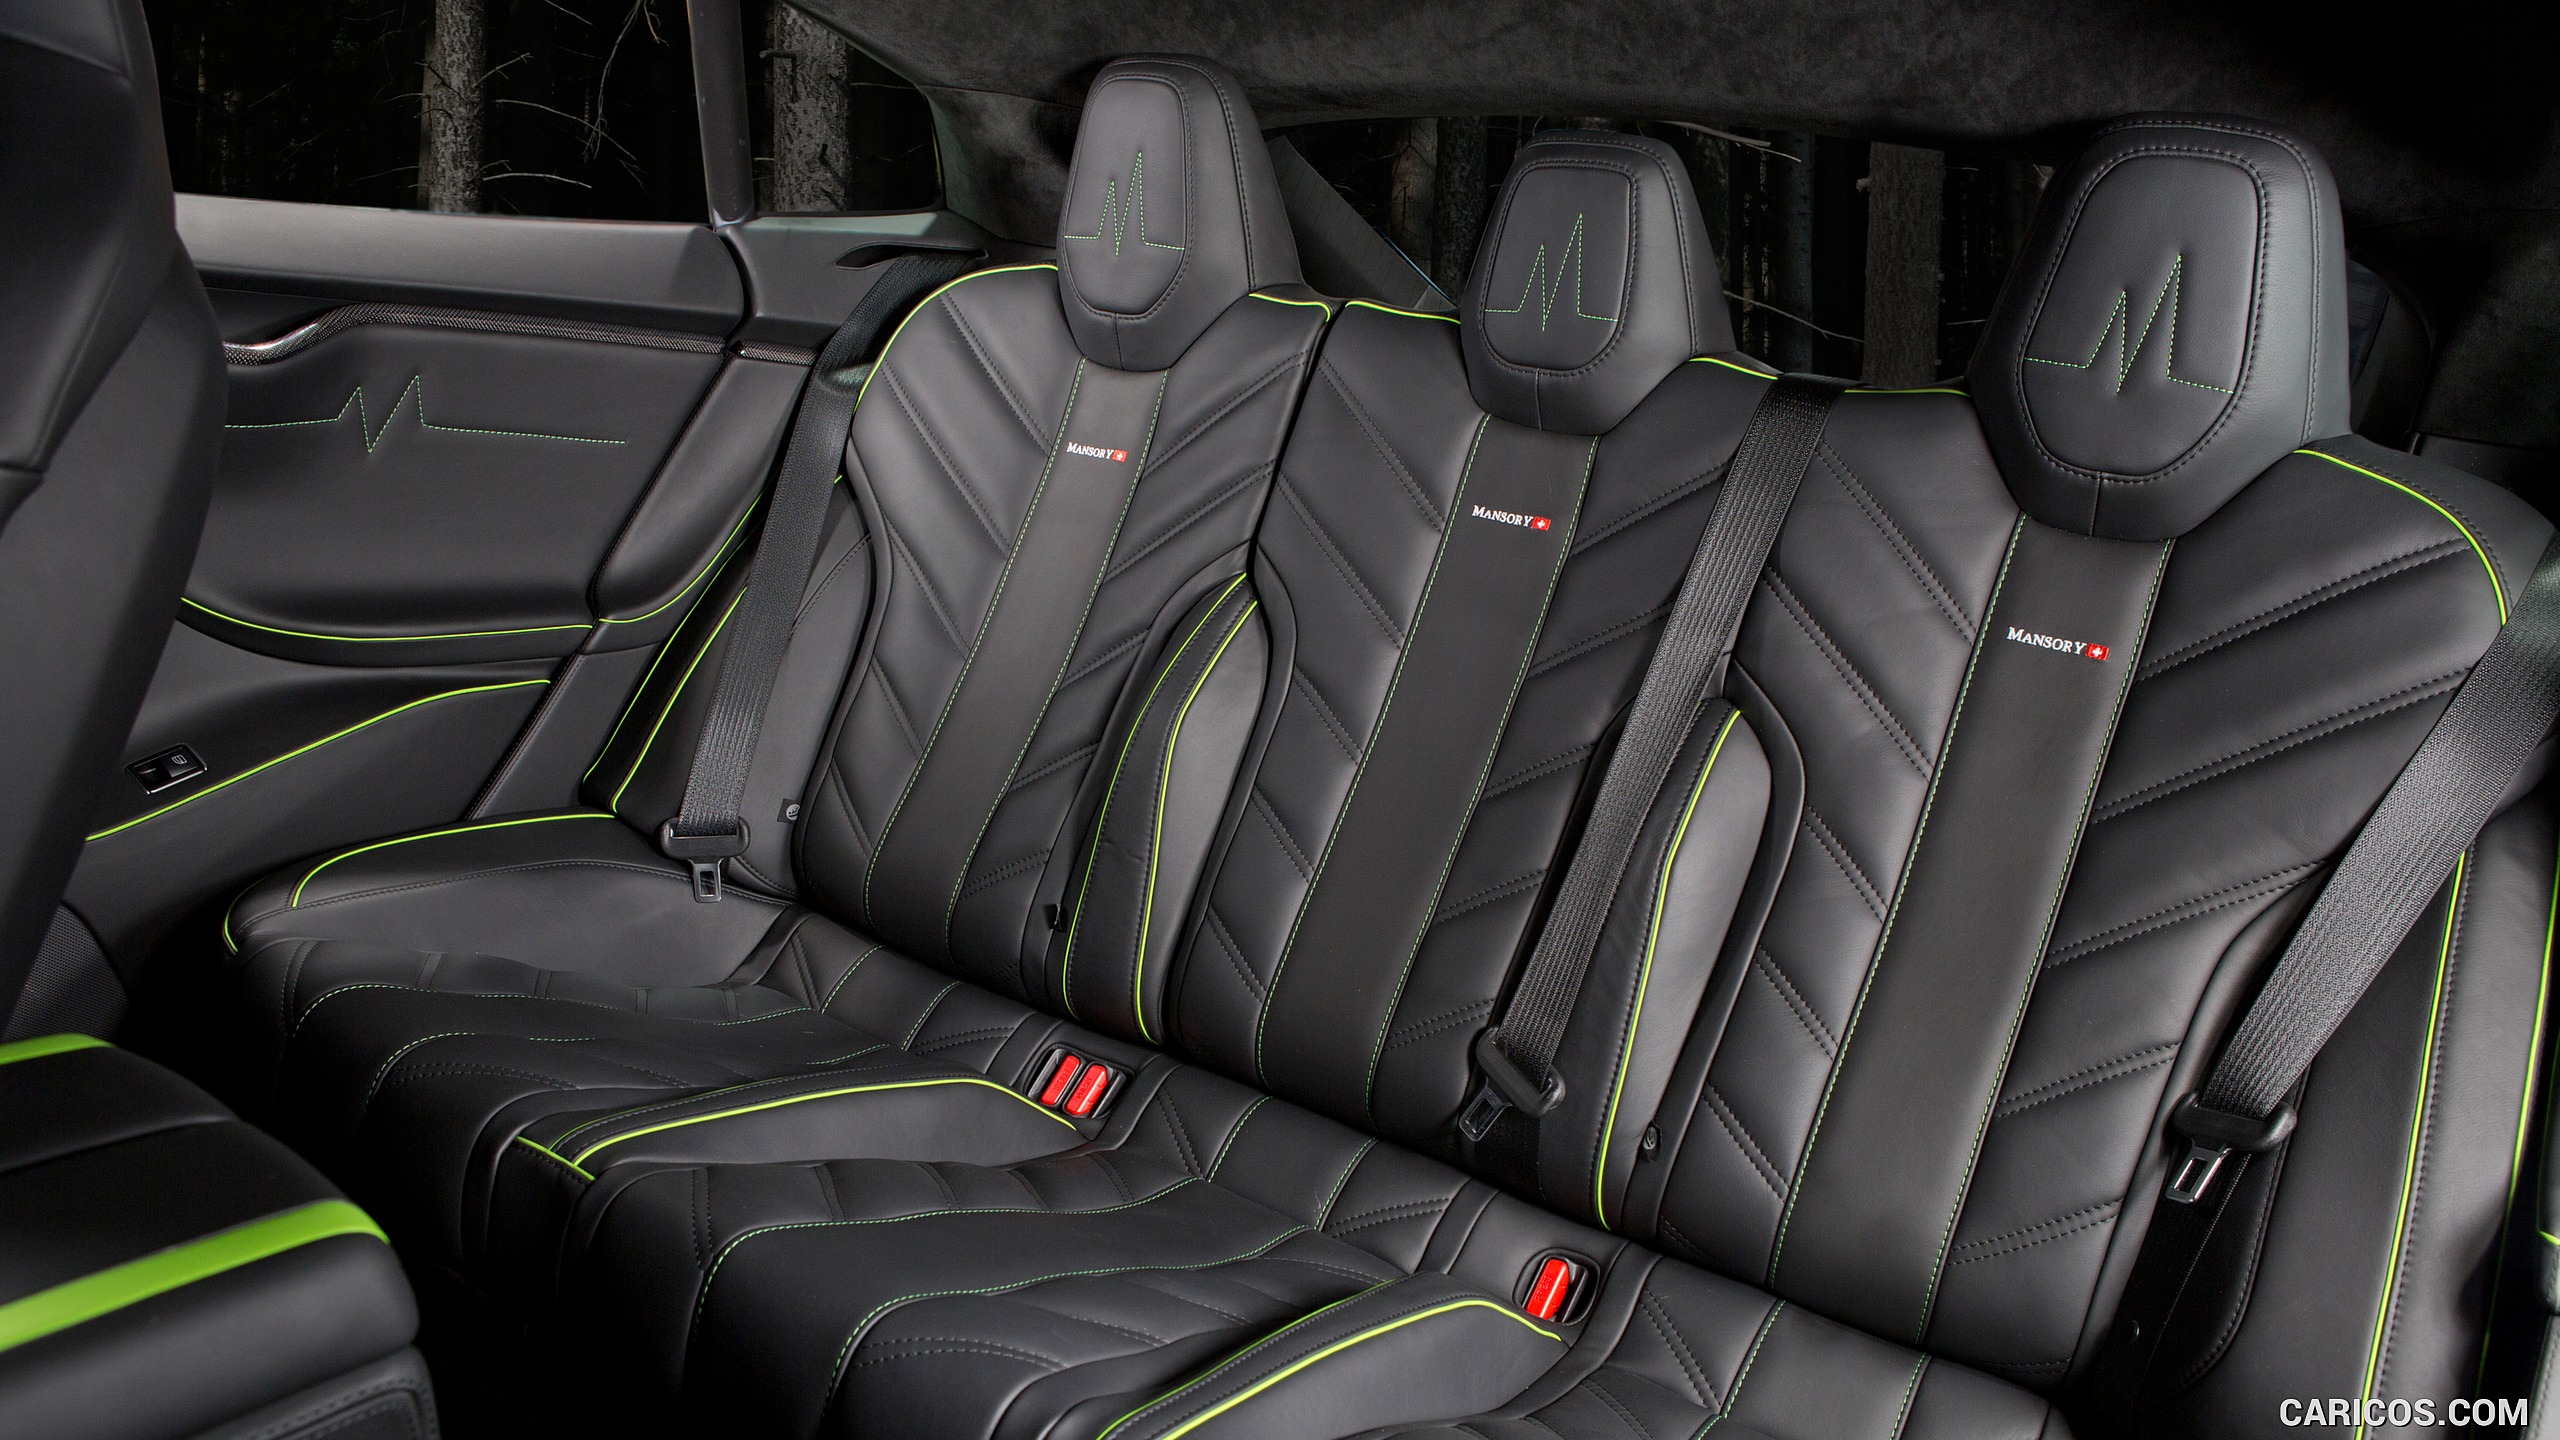 2015 MANSORY Tesla Model S - Interior, Rear Seats, #10 of 10